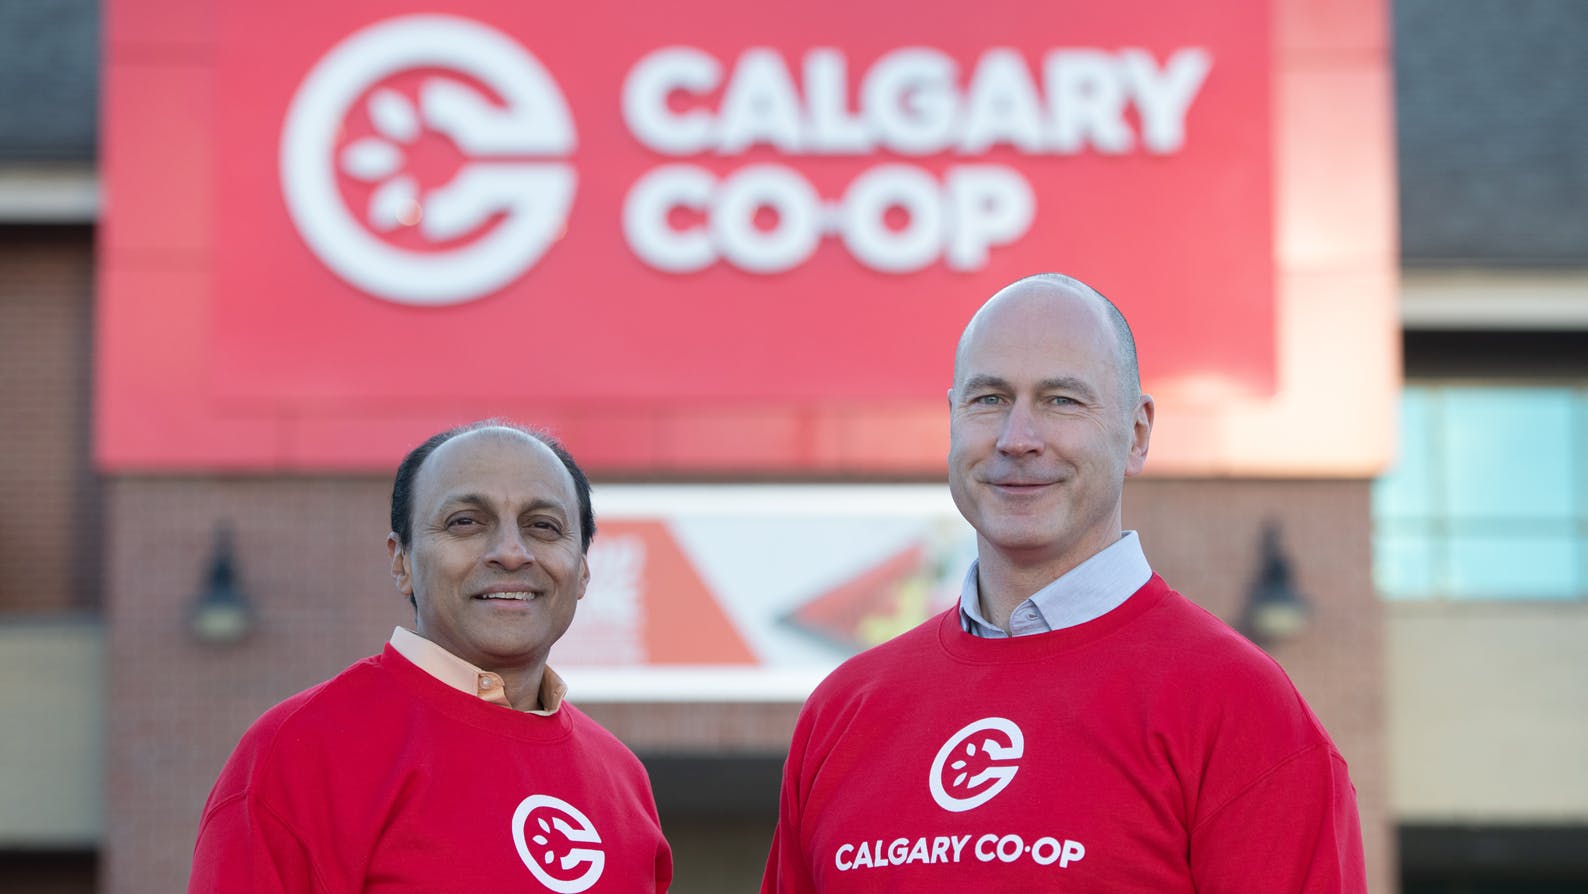 Ken Keelor, CEO, Calgary Co-op and Brad Krizan, Board Chair, Calgary Co-op